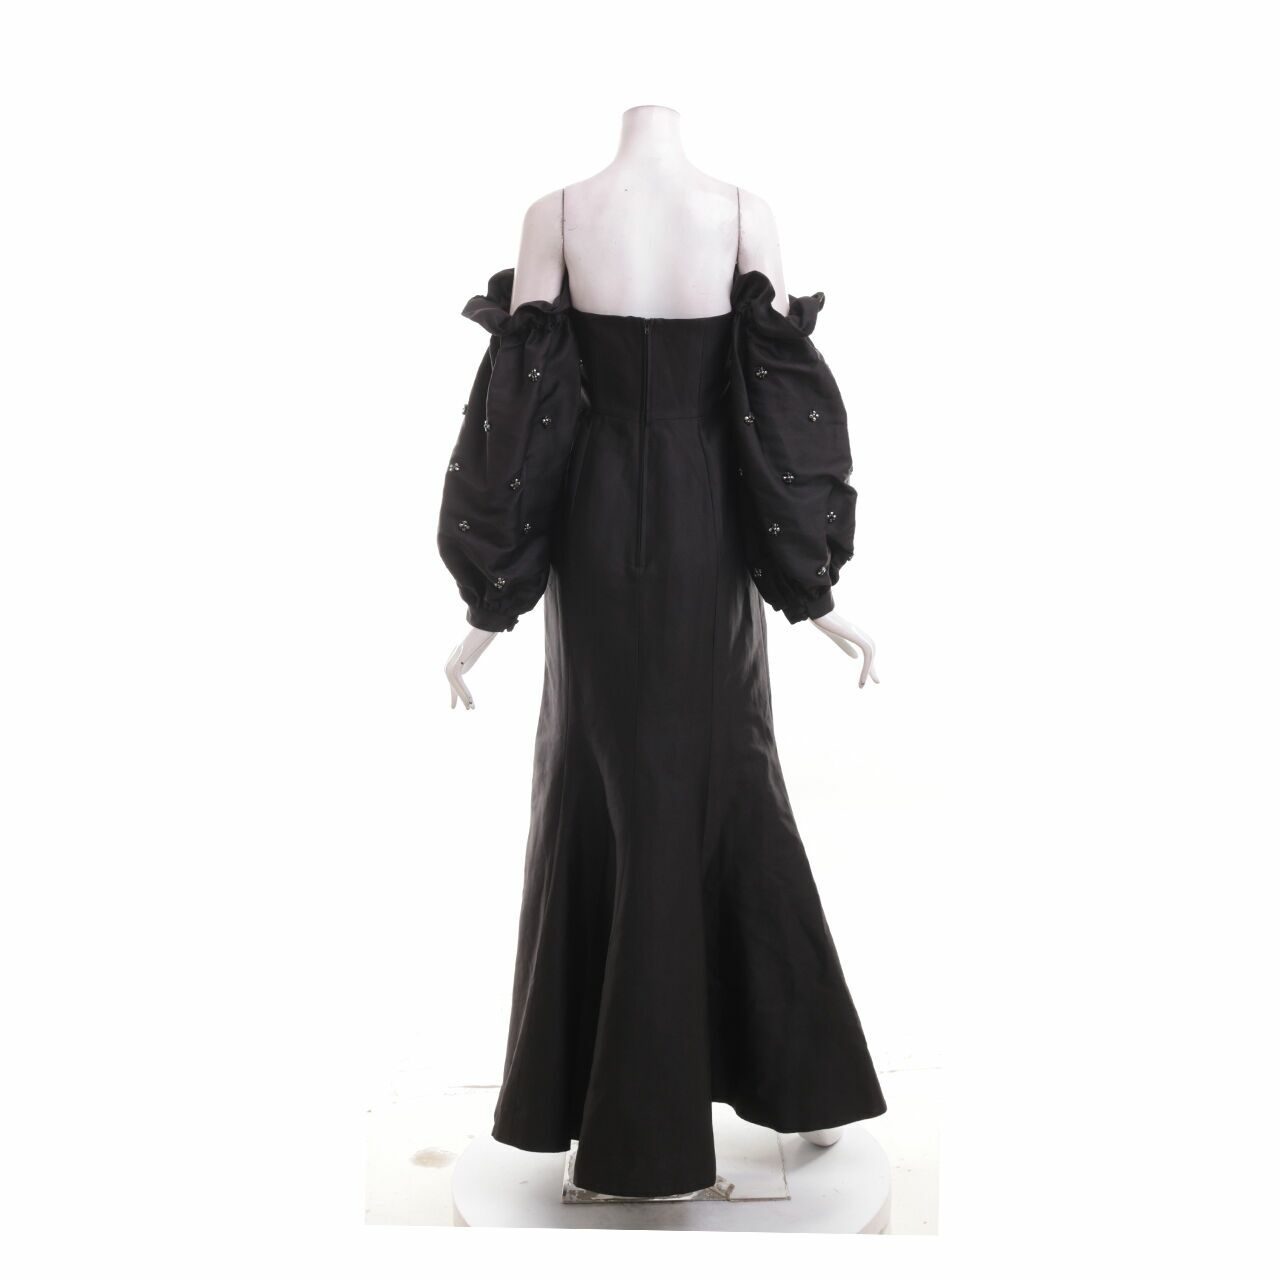 C/MEO Collective Black Long Dress